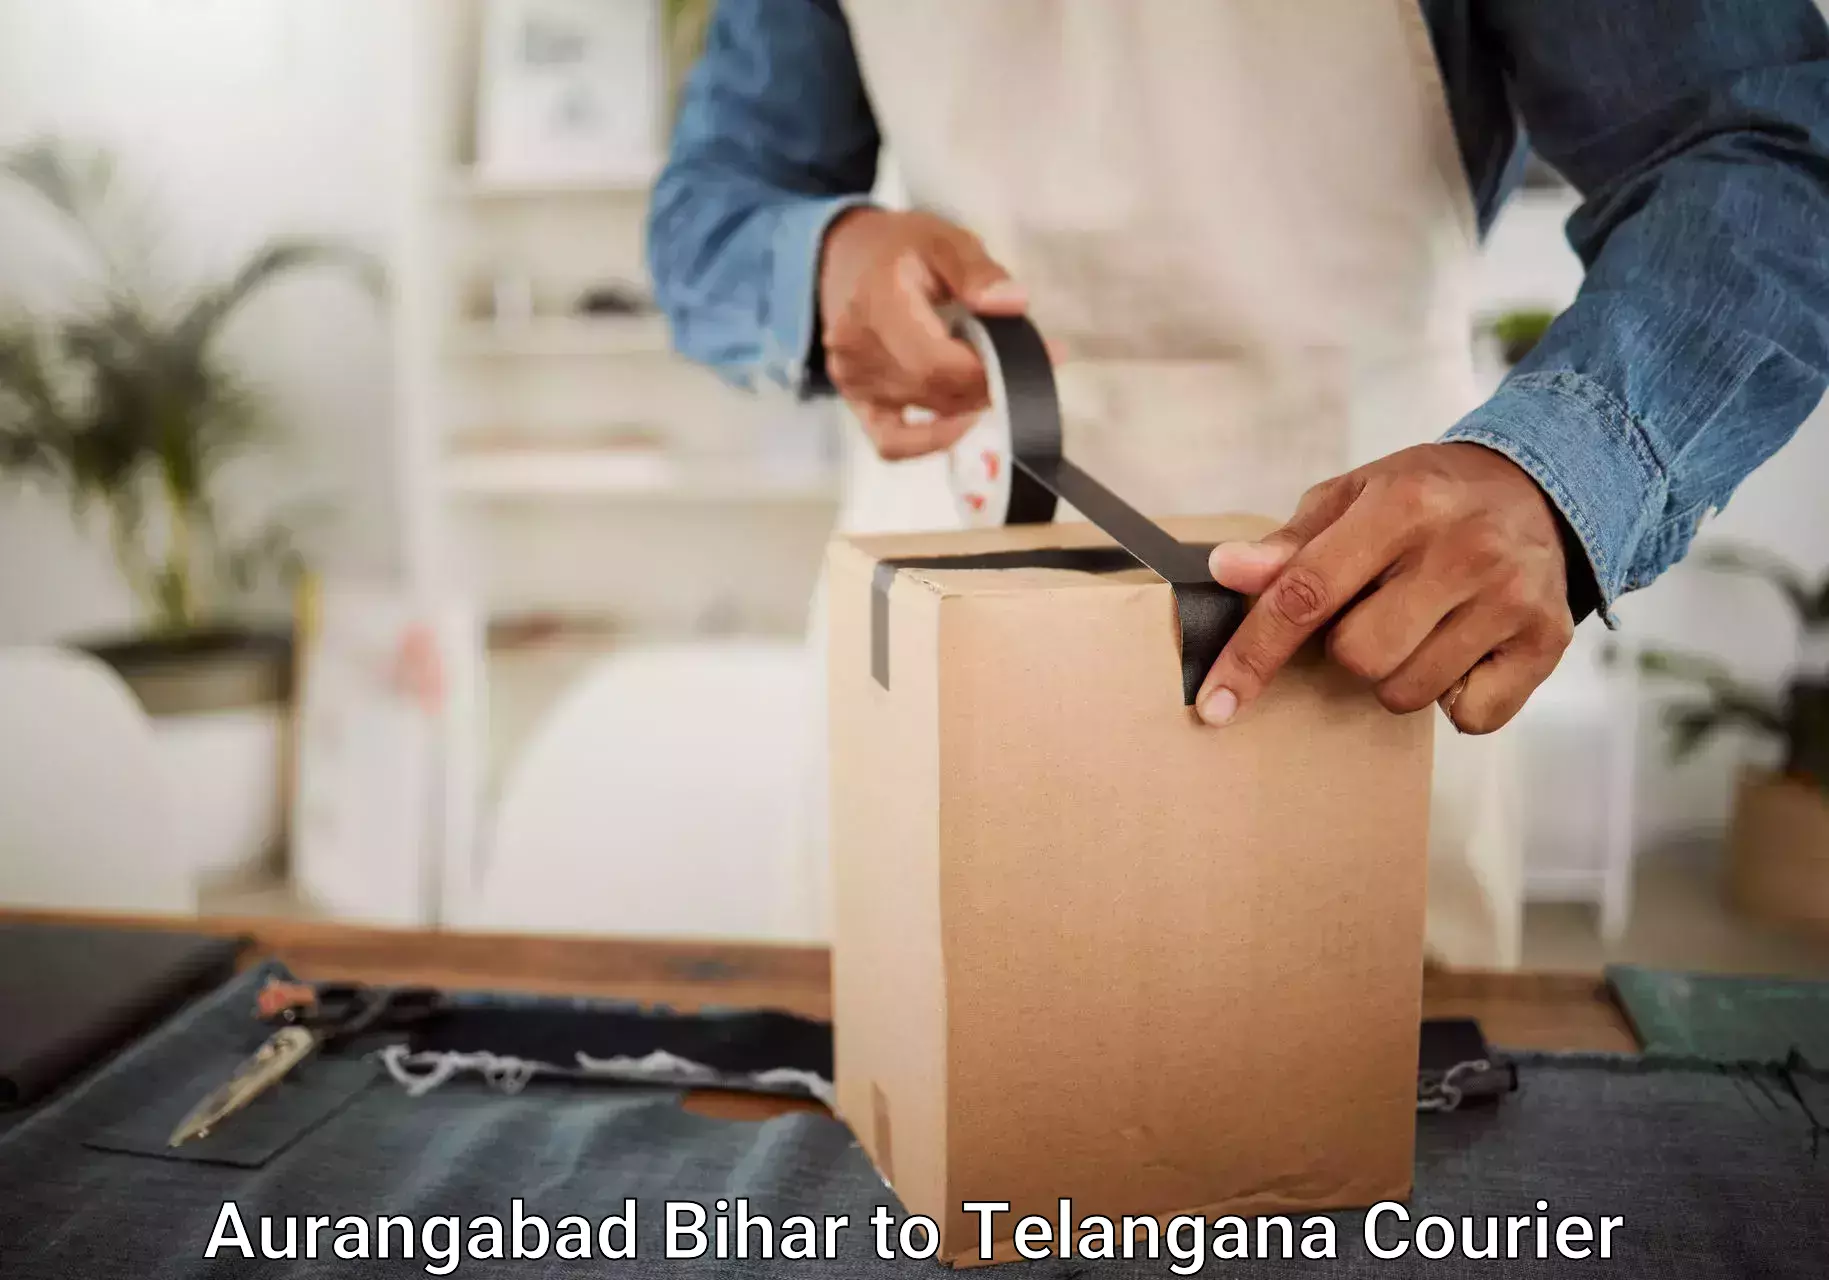 Luggage delivery network Aurangabad Bihar to Kamareddy